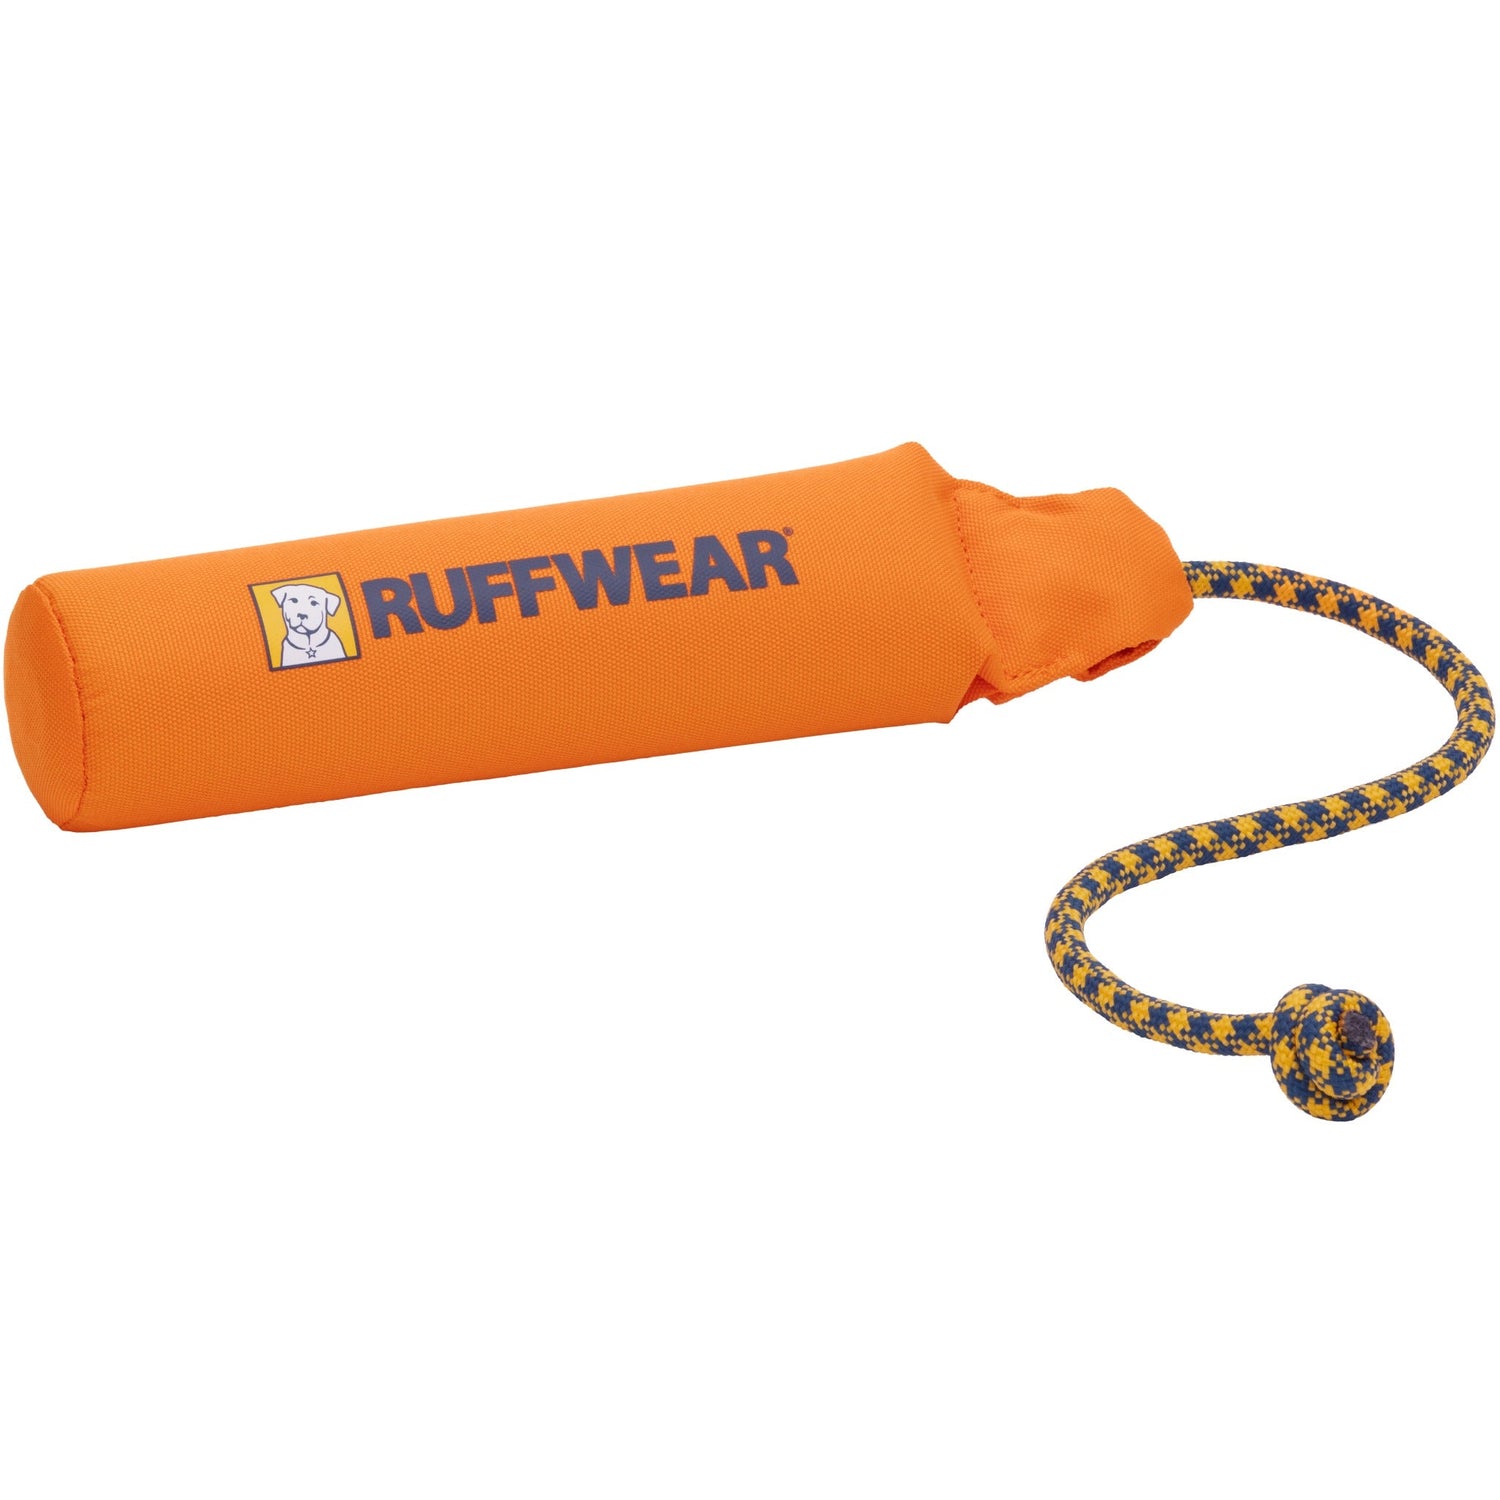 Ruffwear Lunker™ Hundespielzeug schwimmfähig - Woofshack